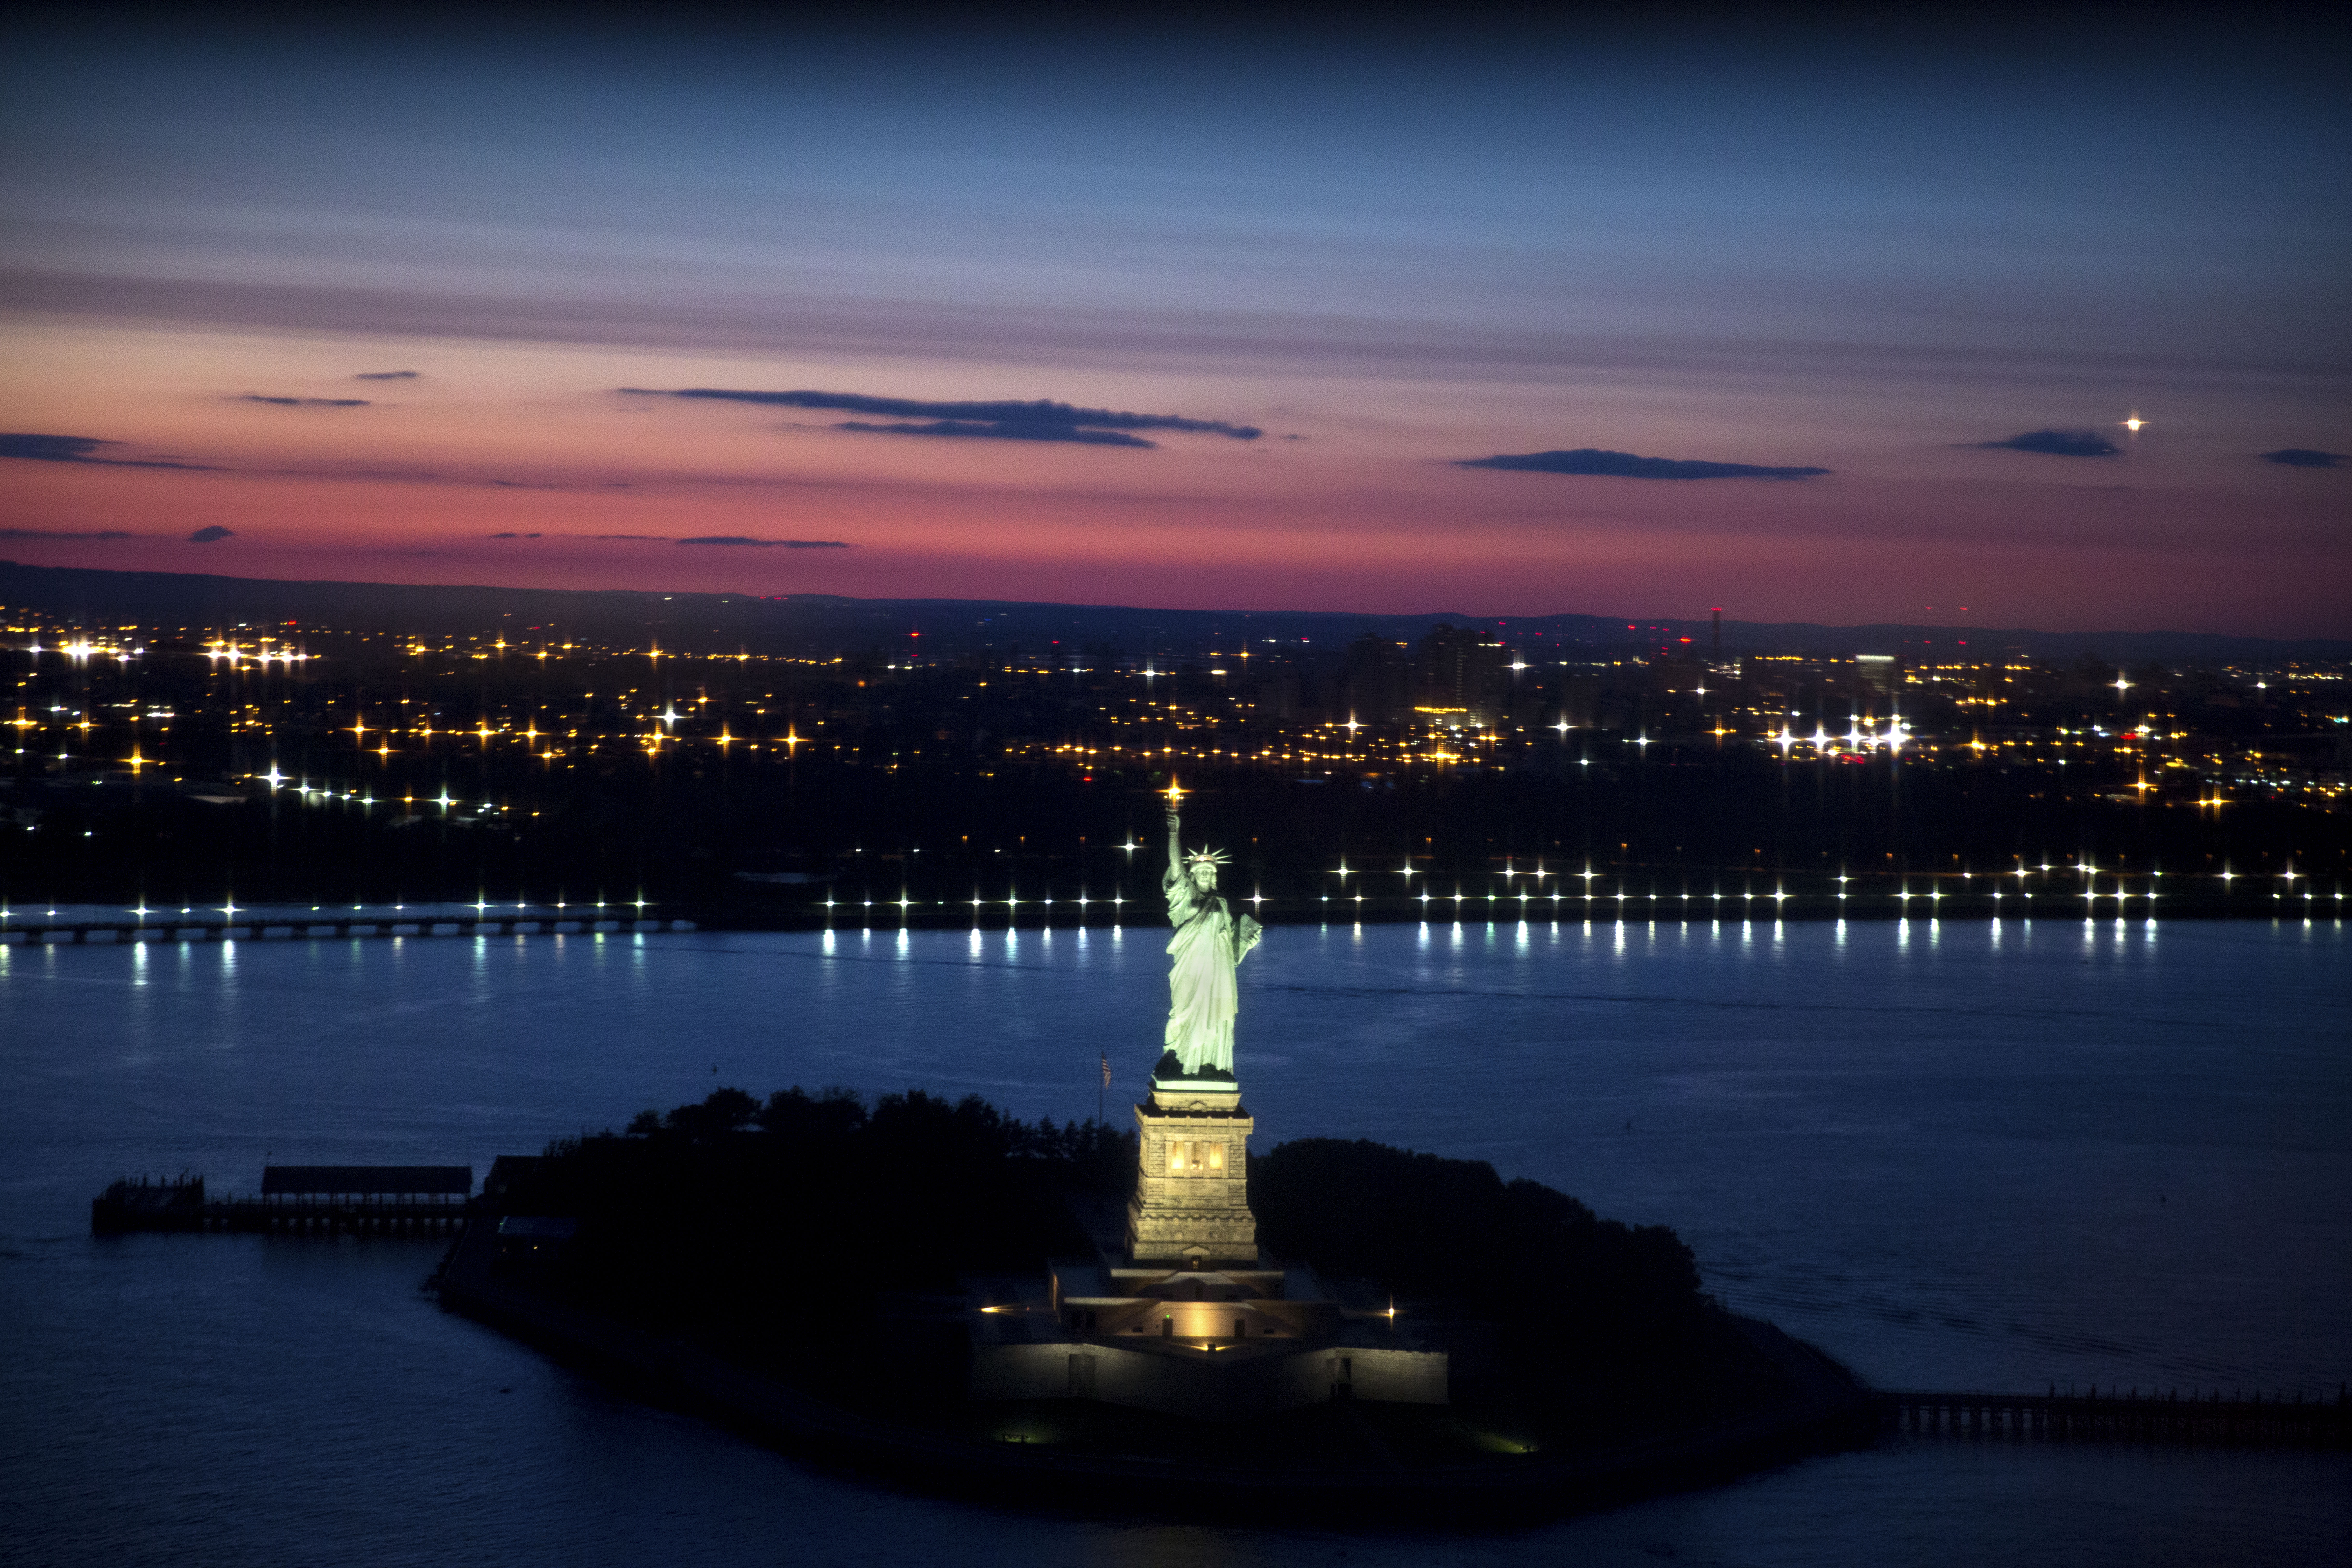 new york statue of liberty inside